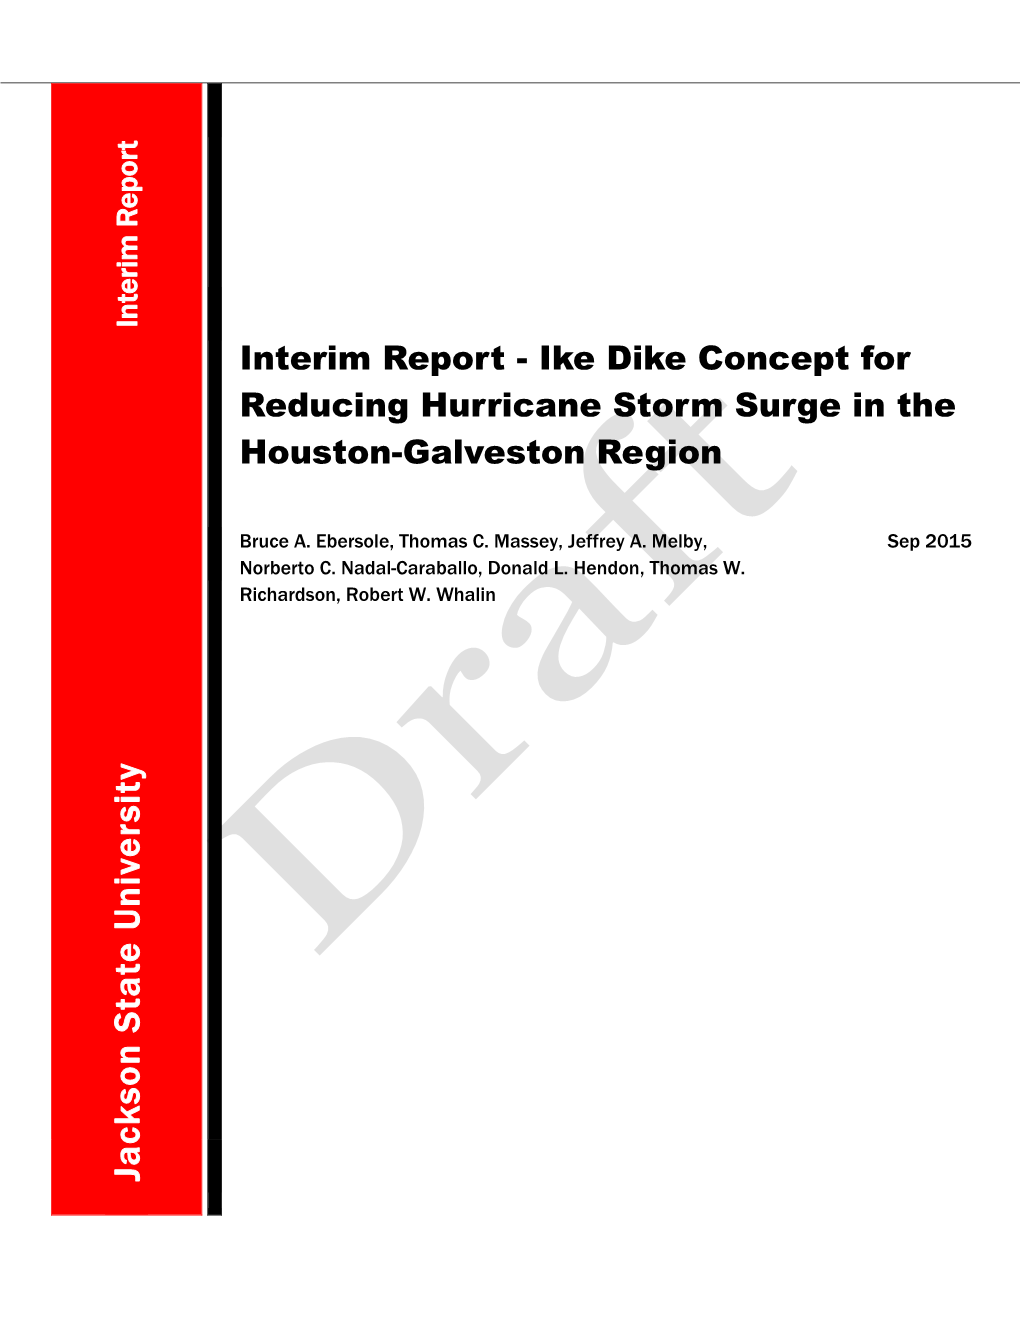 Ike Dike Concept for Reducing Hurricane Storm Surge in the Houston-Galveston Region